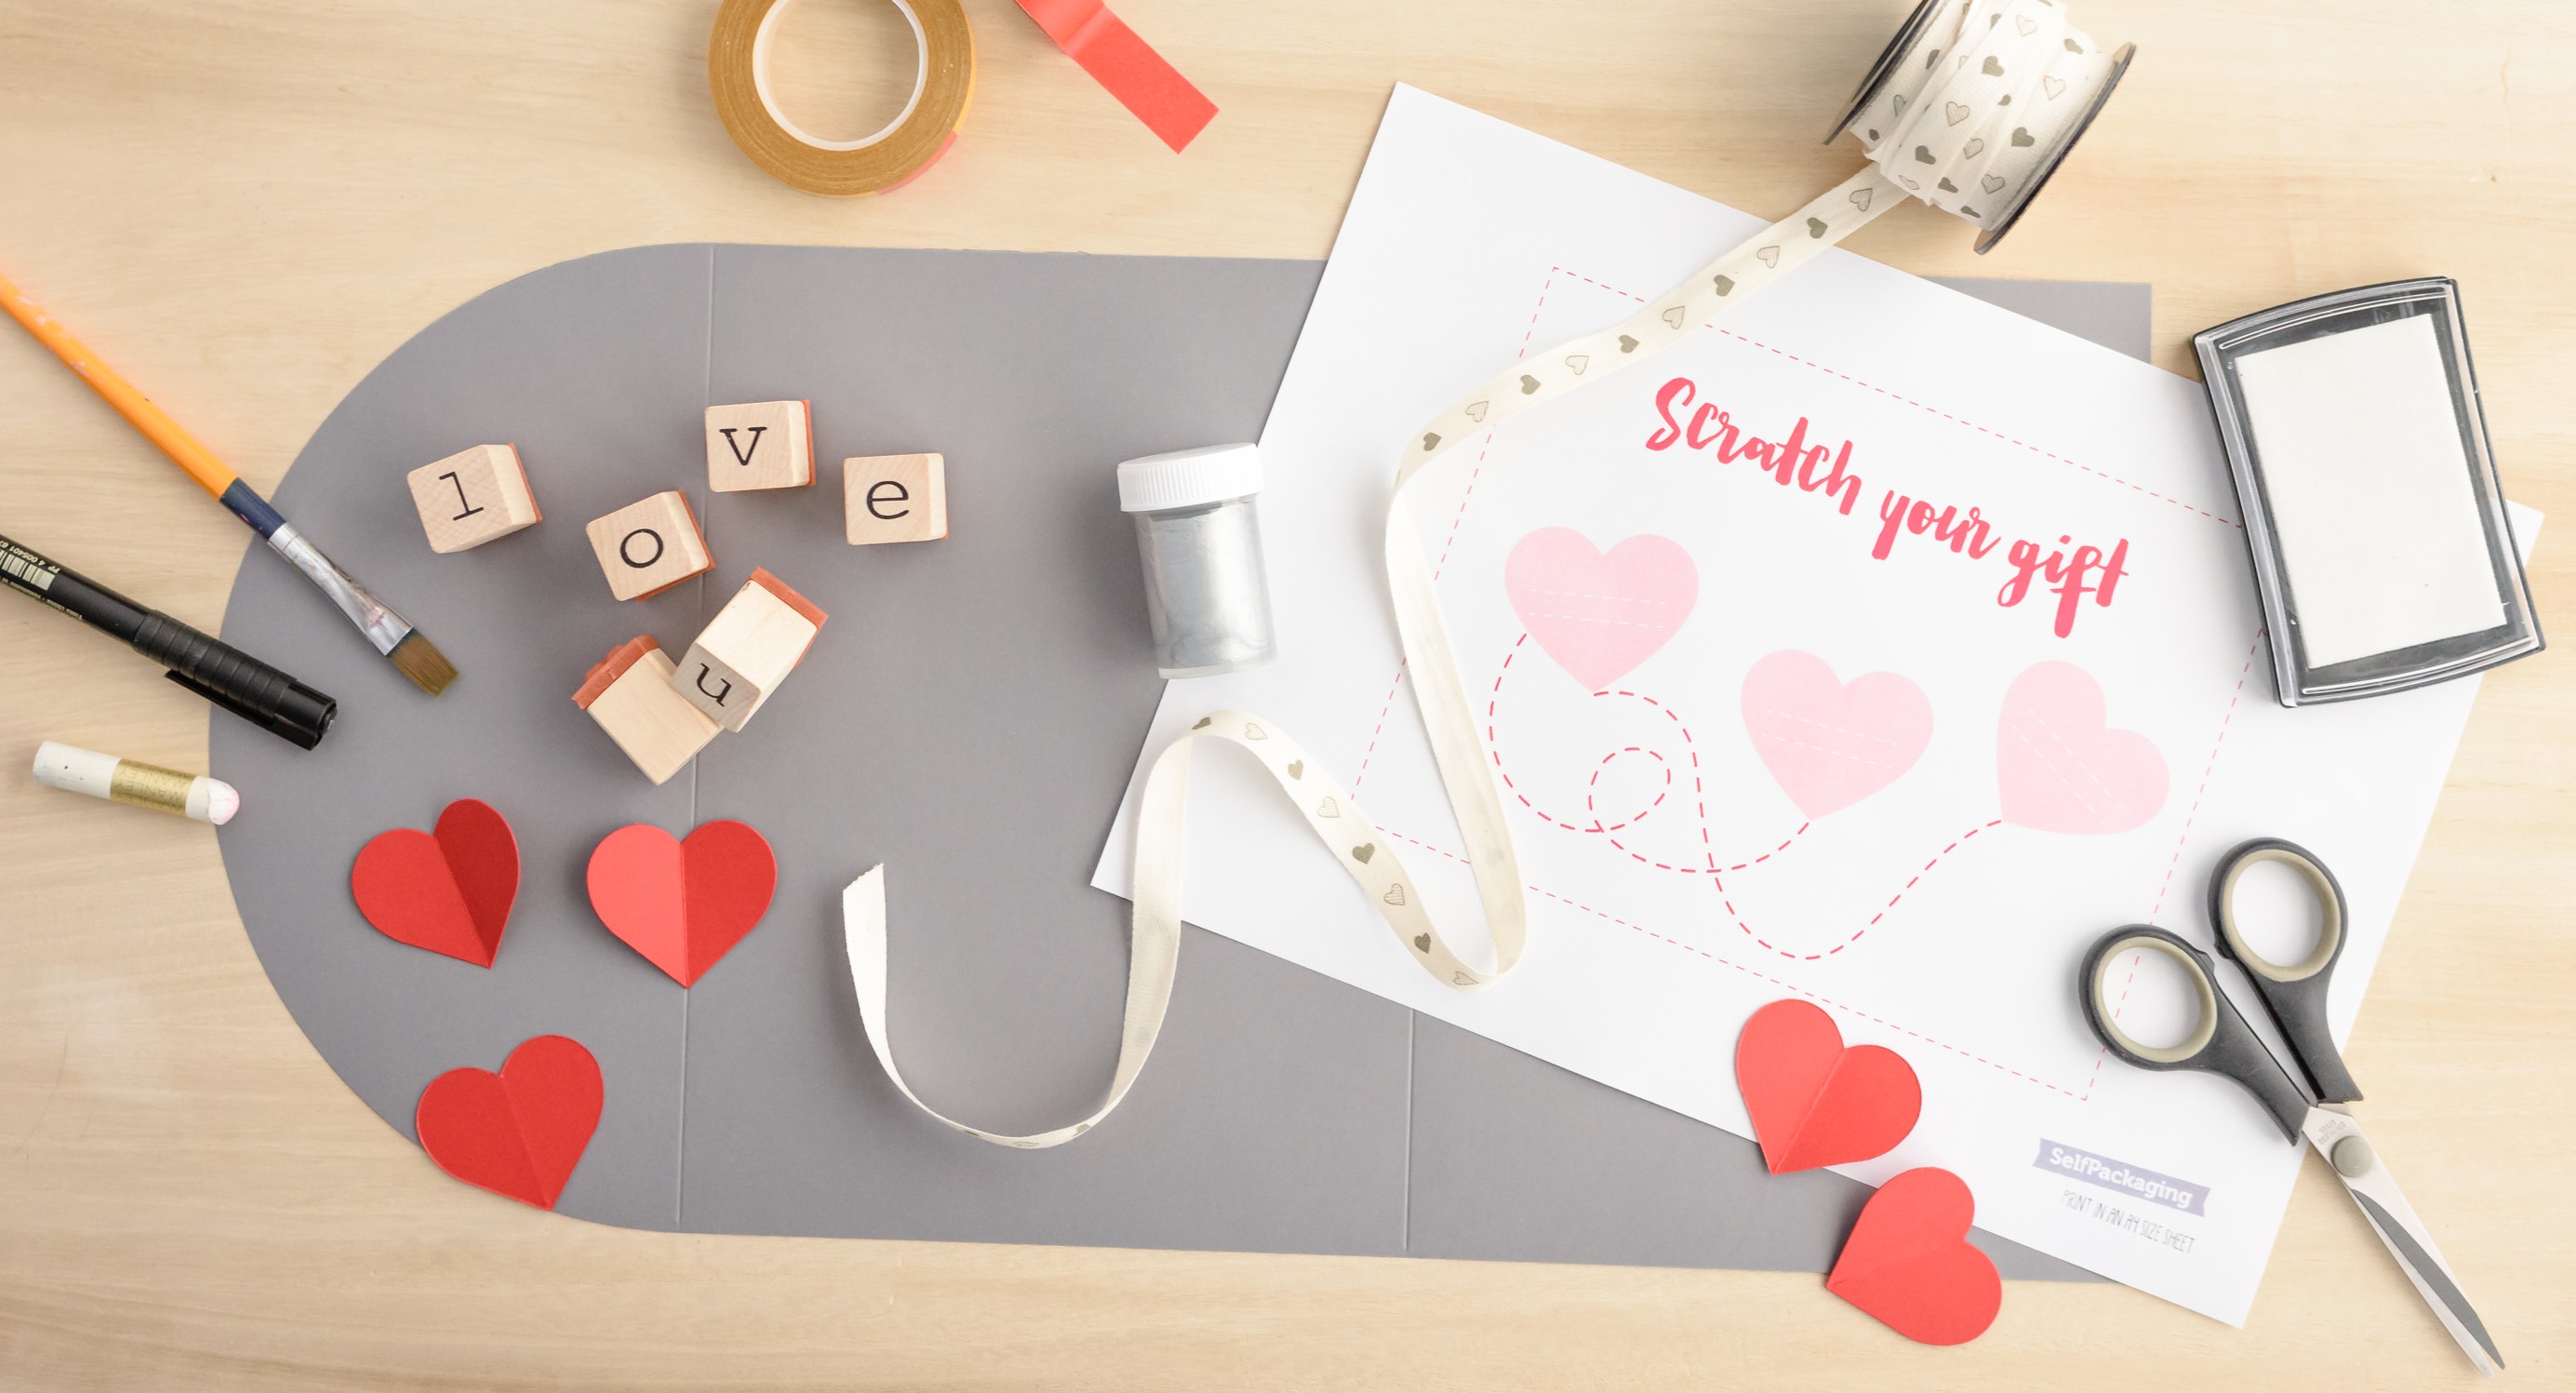 DIY Scratch card for Valentine's day